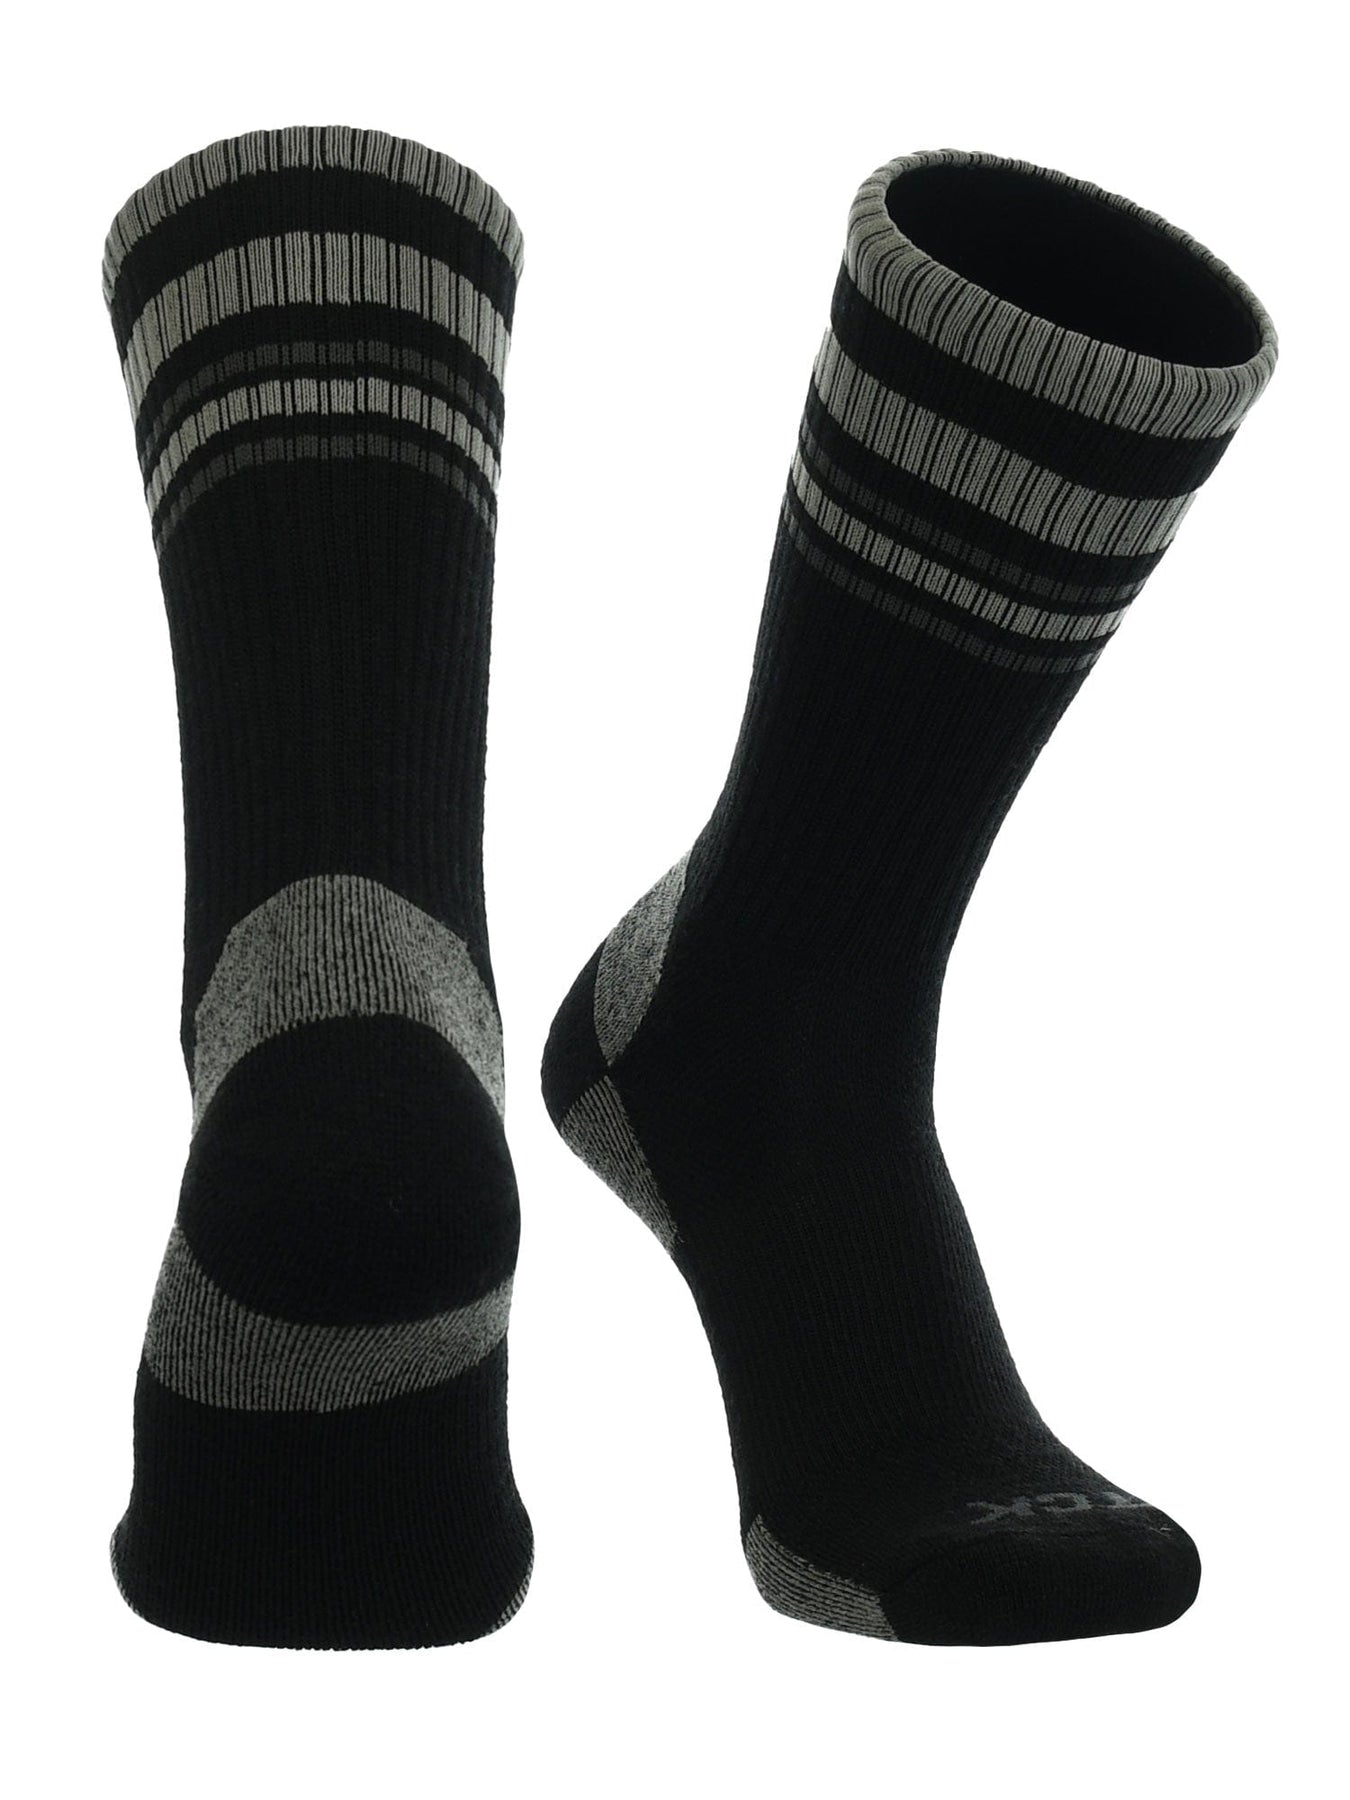 Women's Plus Size White Athletic Socks with Black Stripes